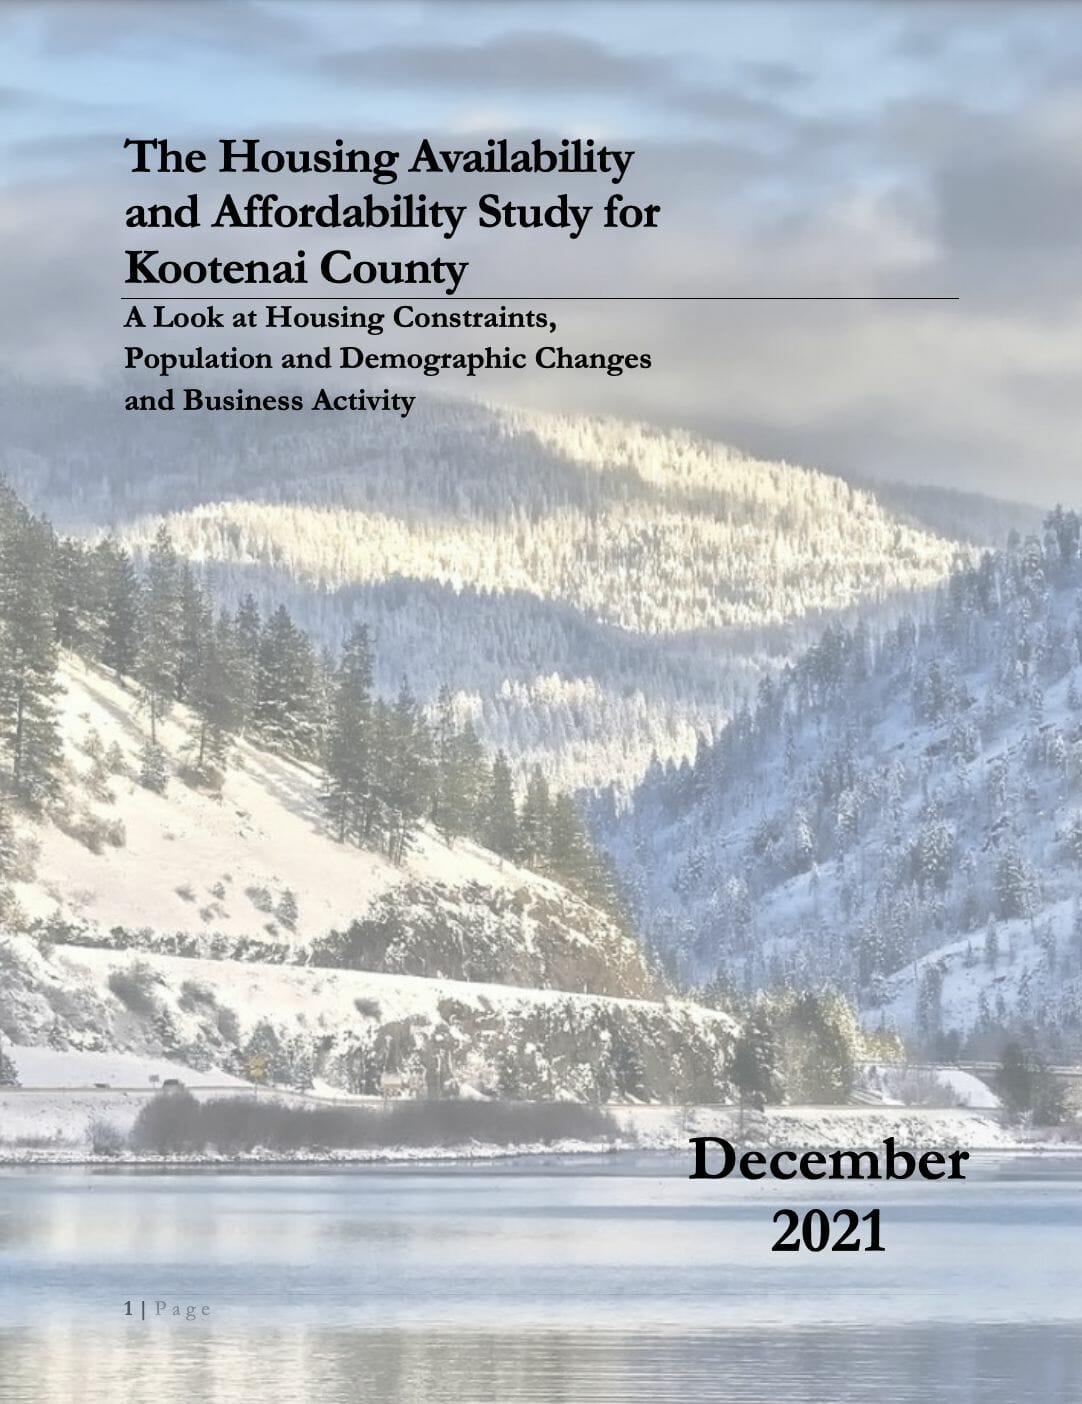 The Housing Availability and Affordability Study for Kootenai County